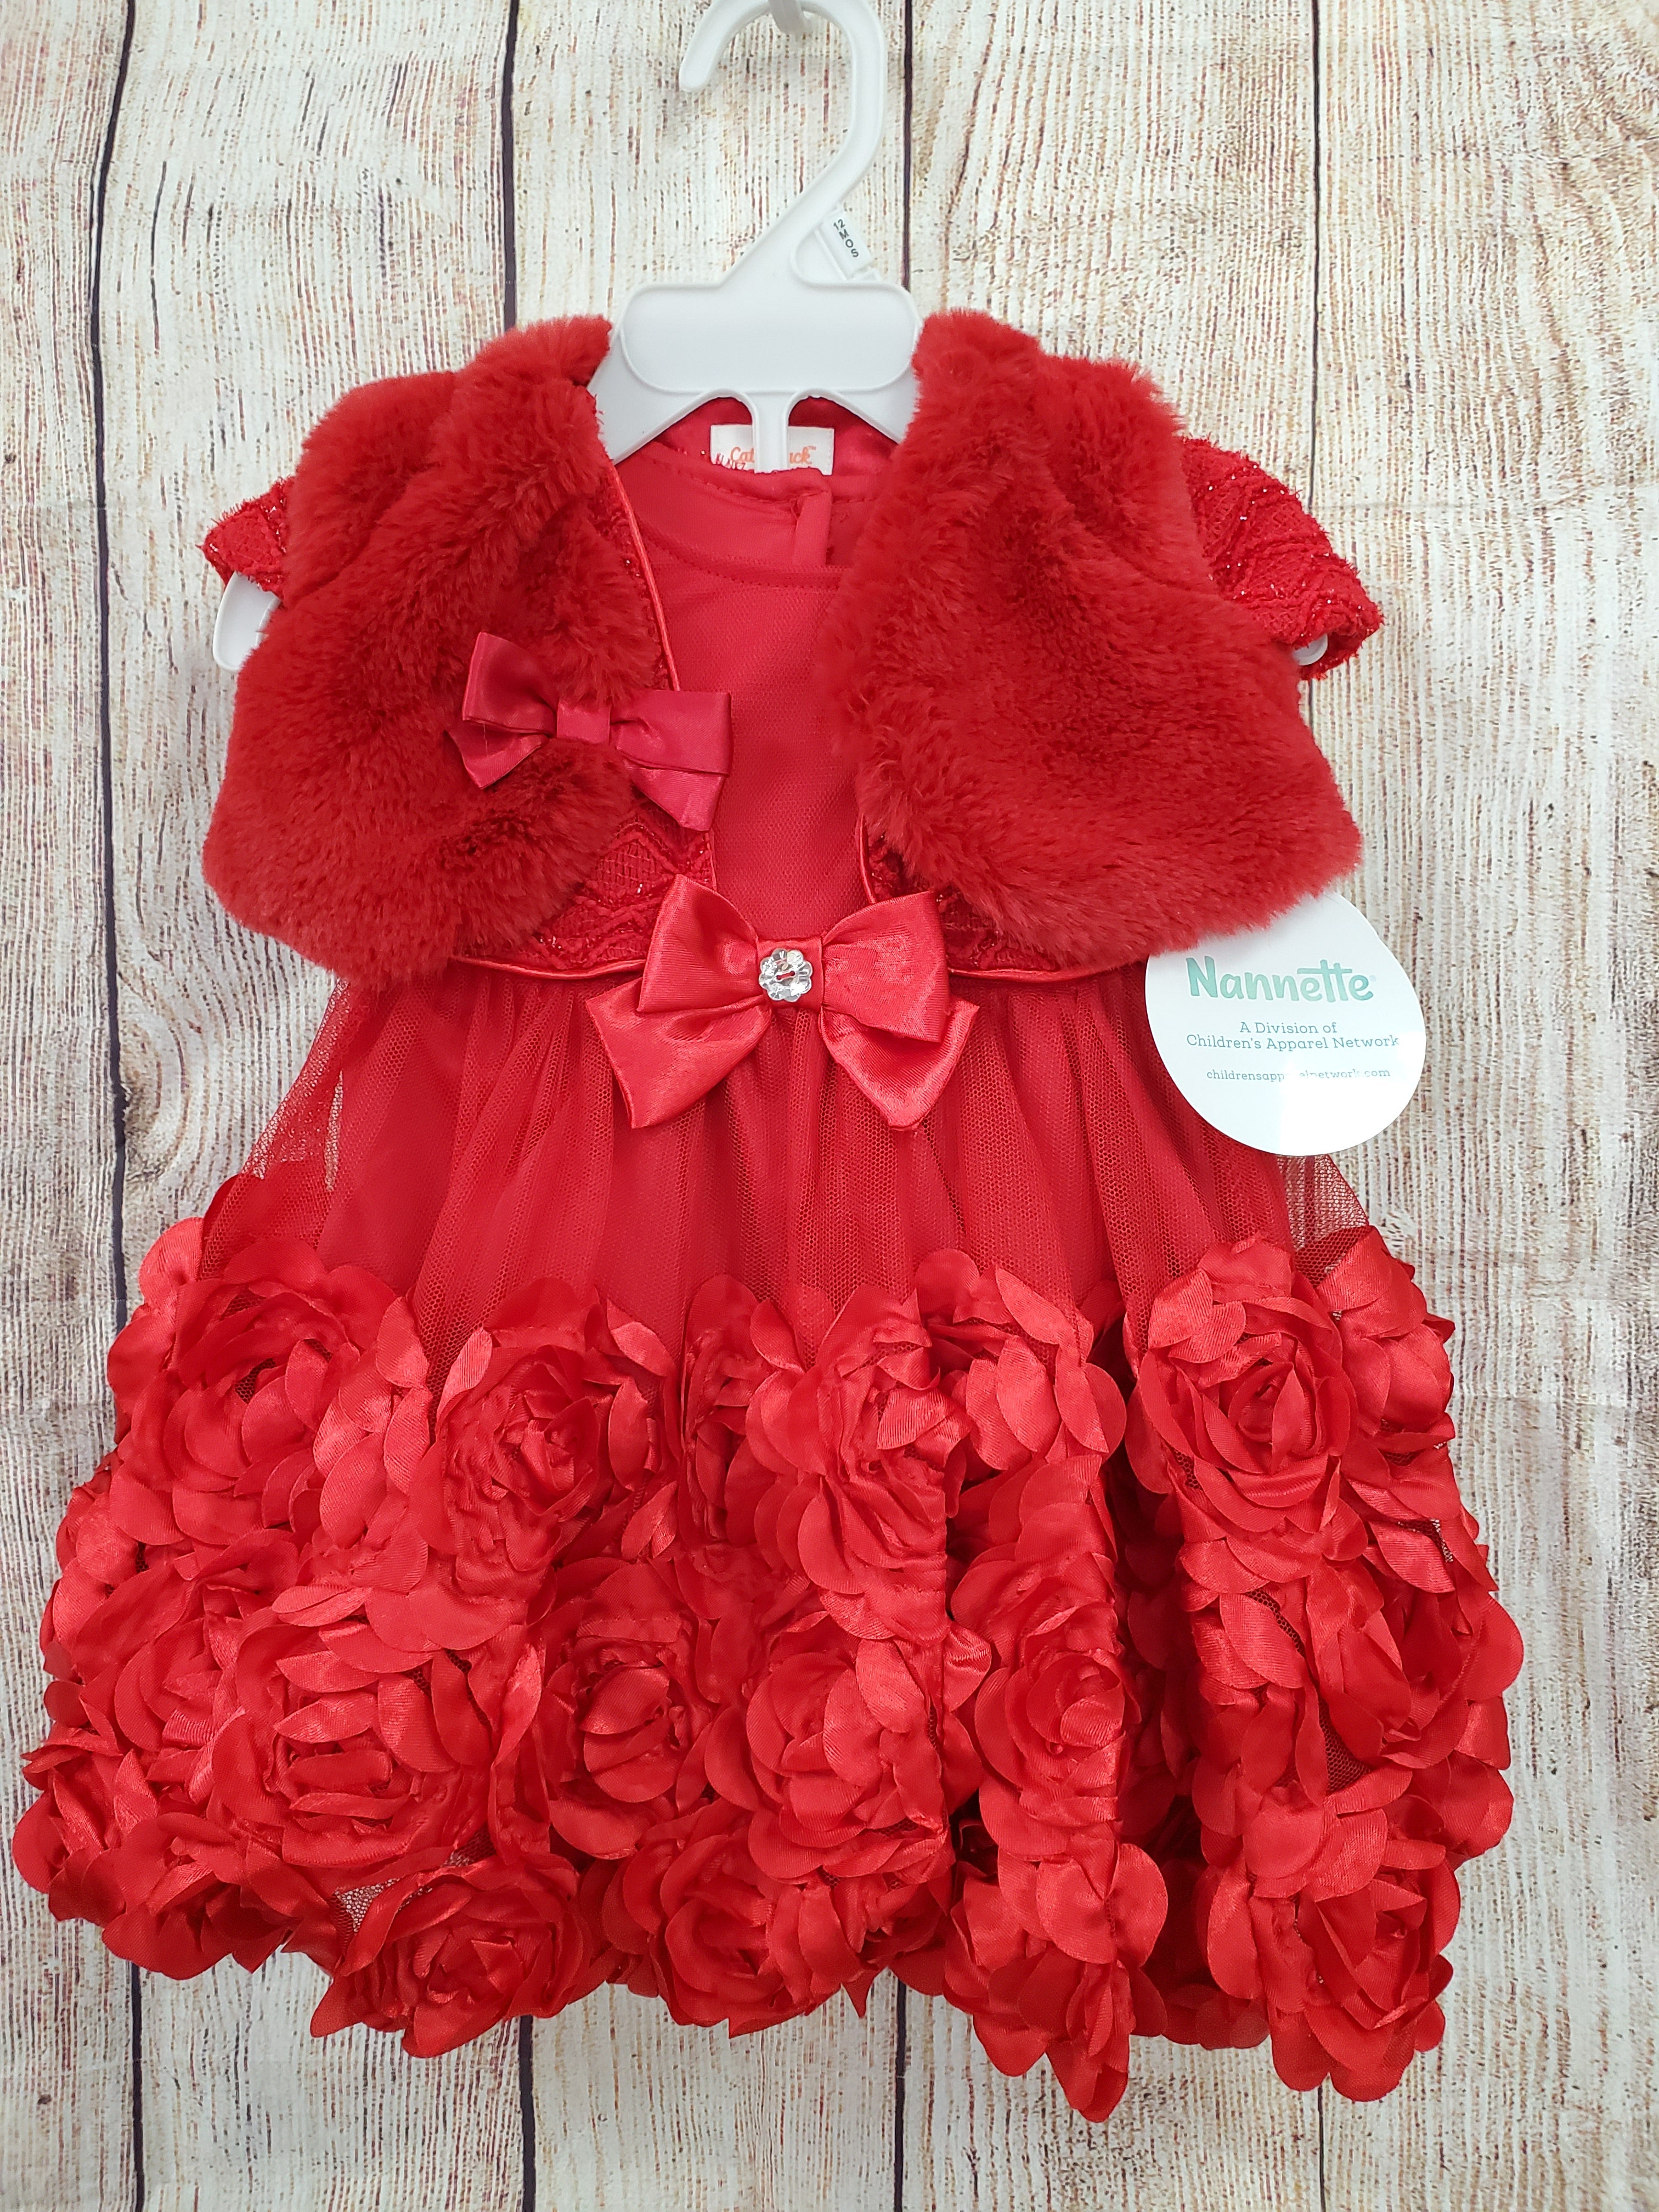 Nannette baby girls New dress set red jacket dress bloomers NB